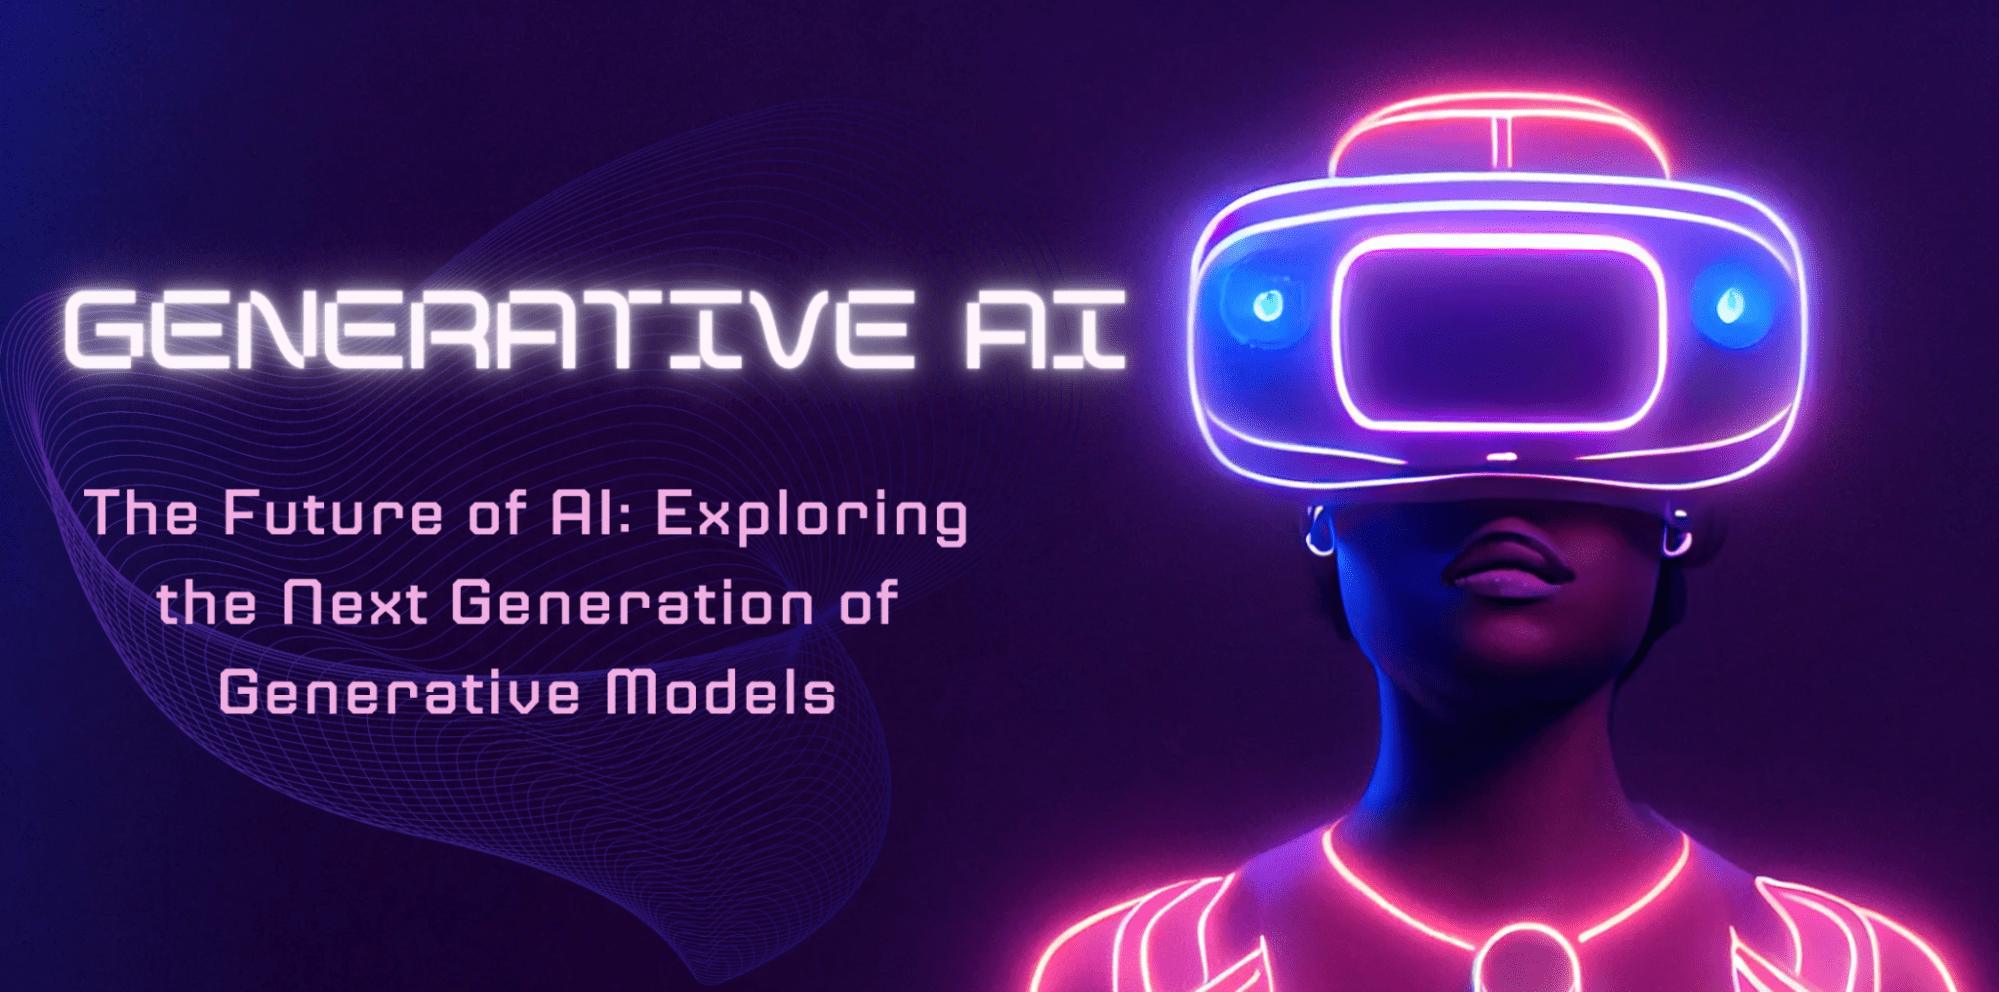 The Future of AI: Exploring the Next Generation of Generative Models